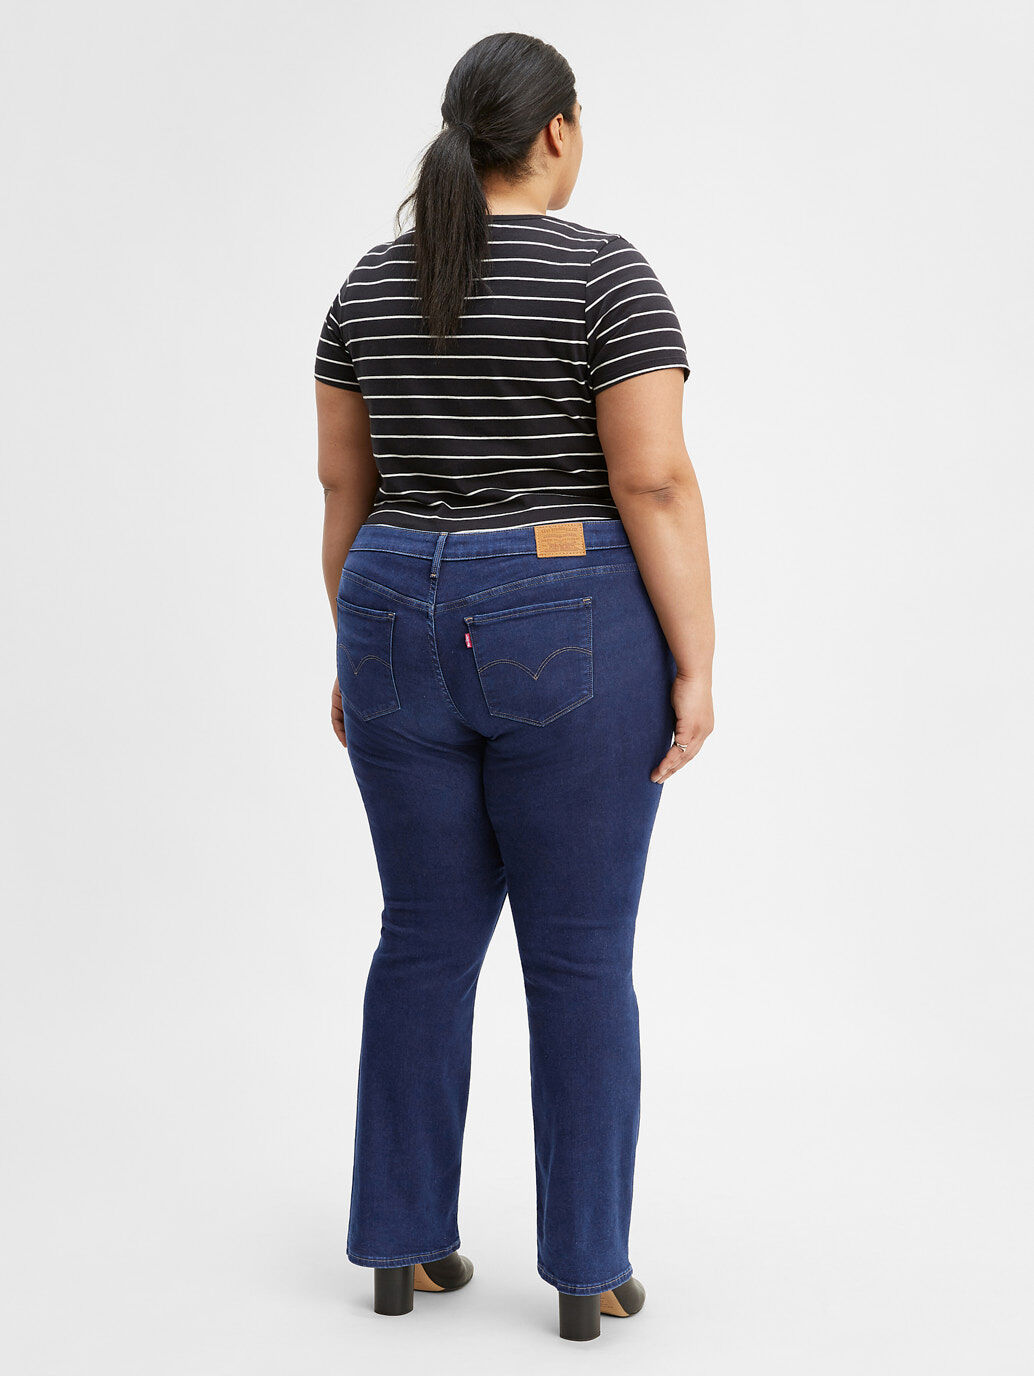 womens bootleg jeans australia